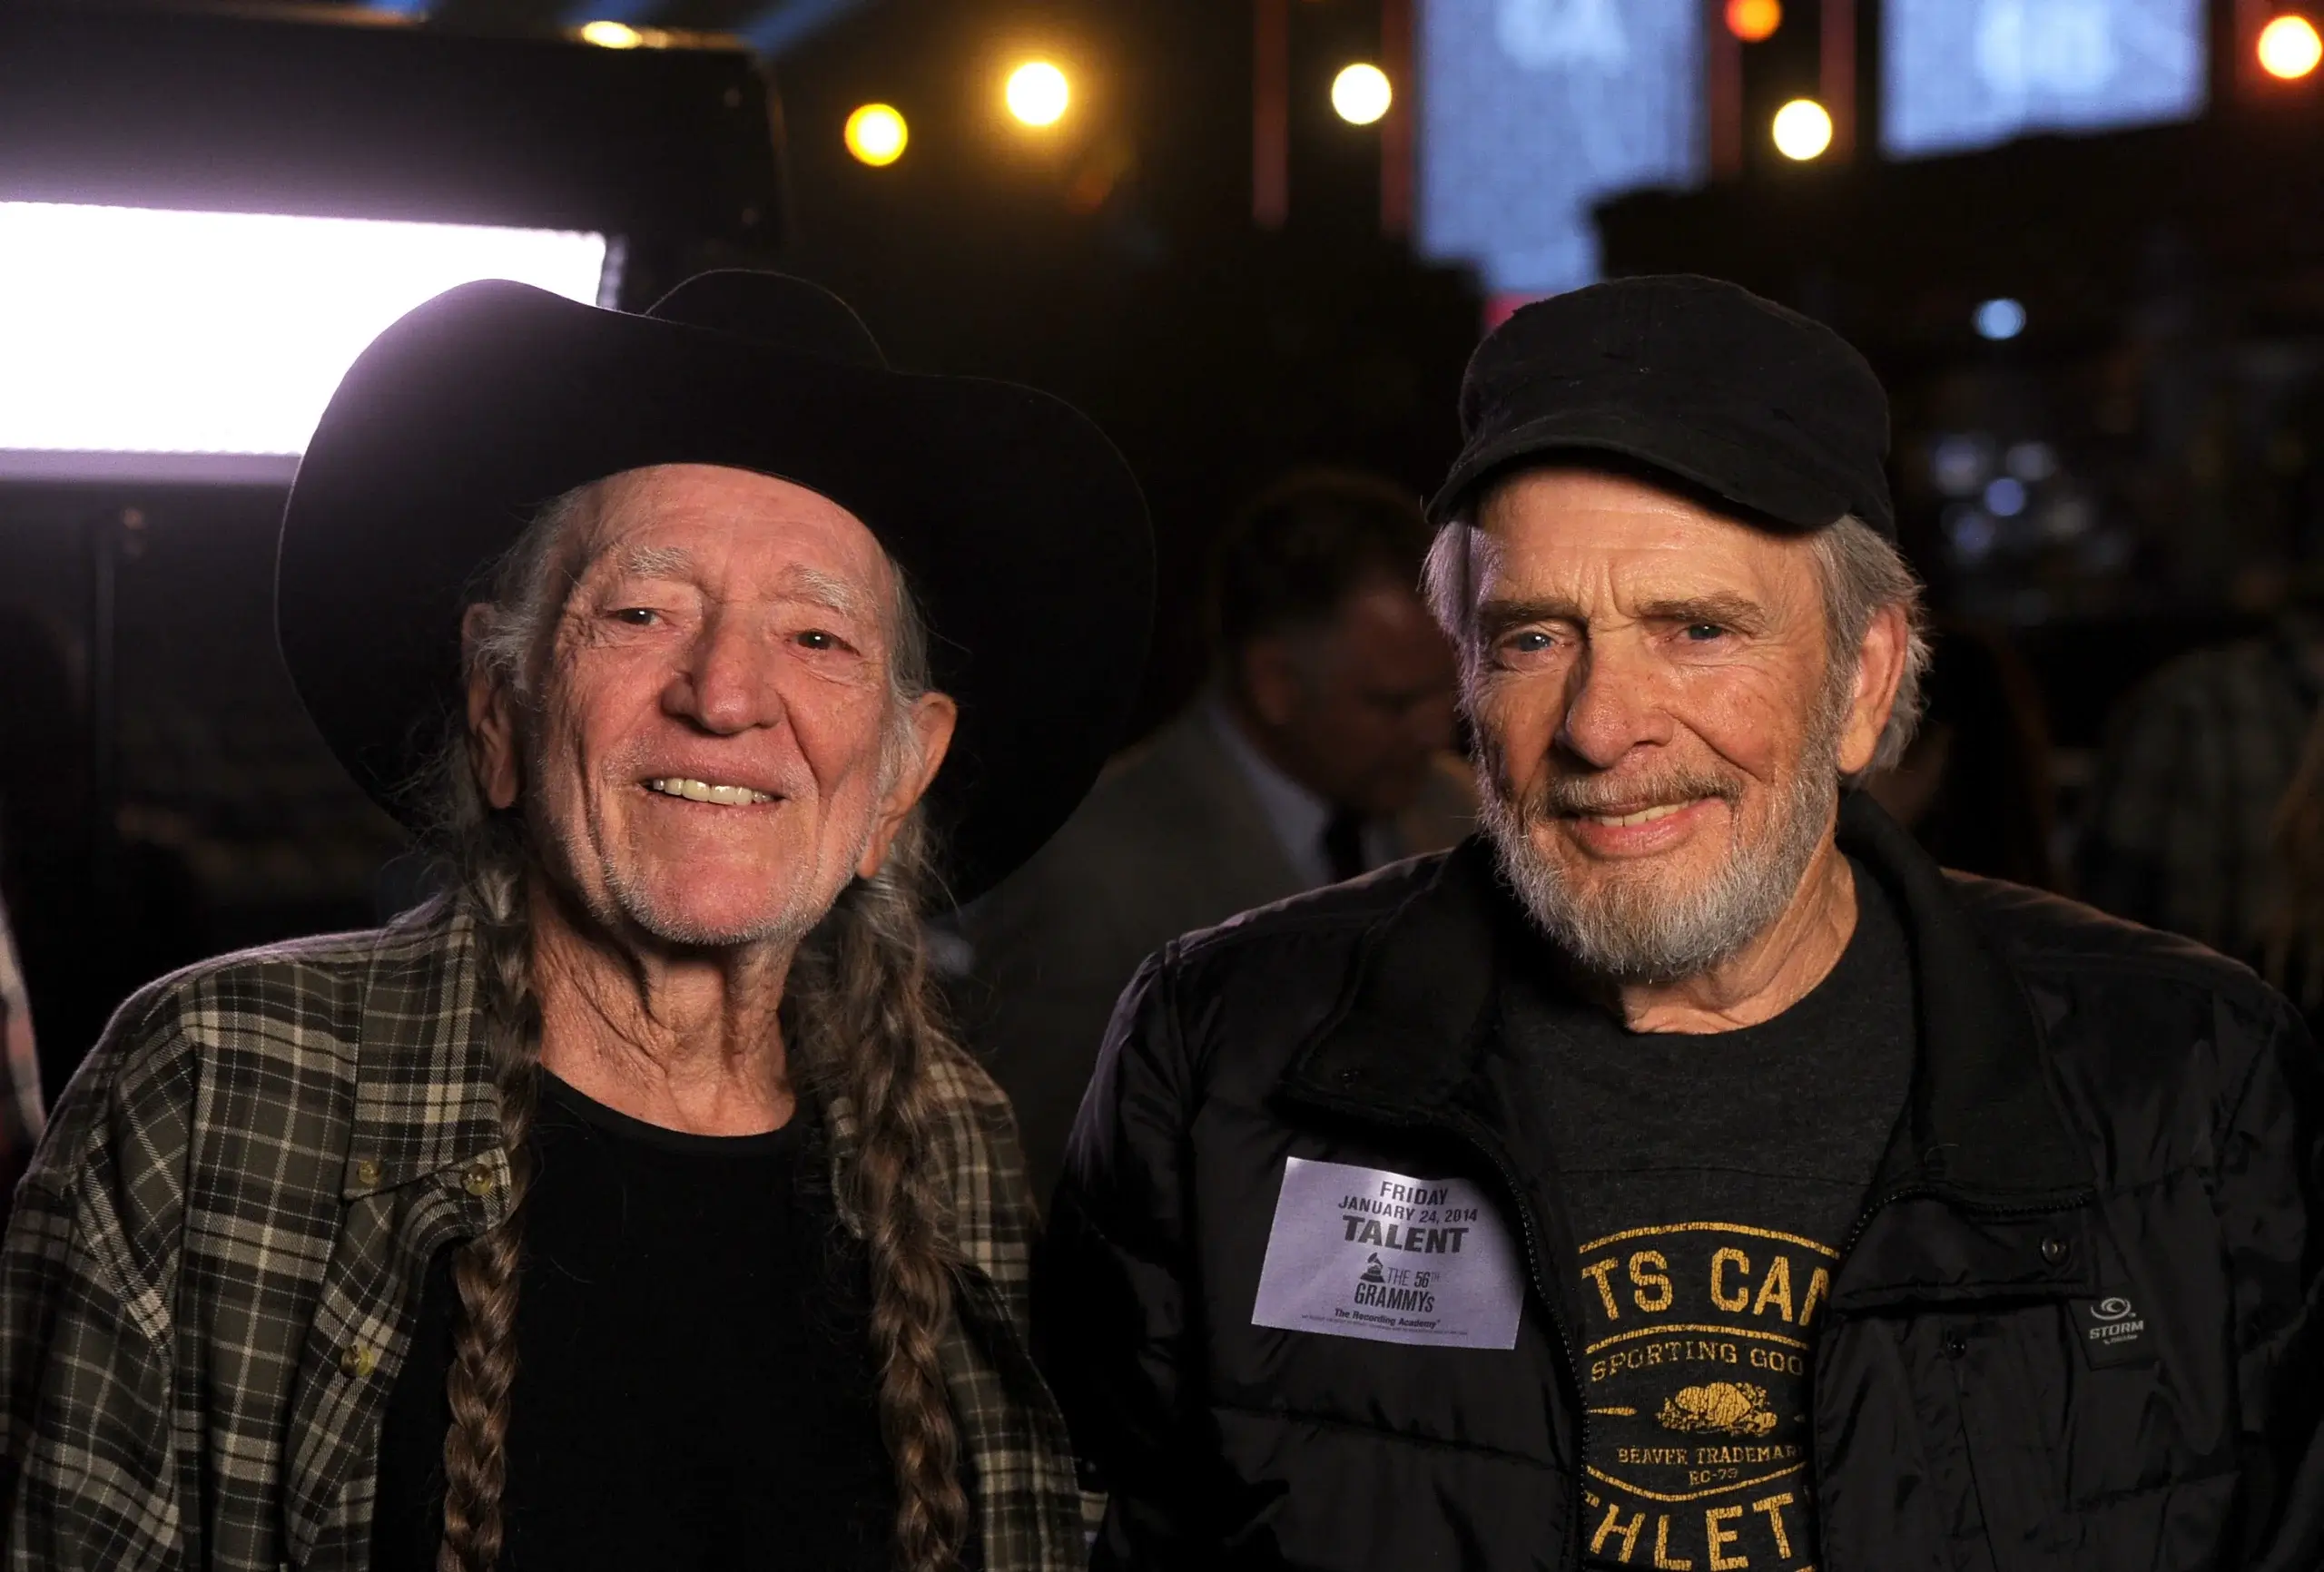 Merle Haggard & Willie Nelson - Okie From Muskogee - The Oldies Songs